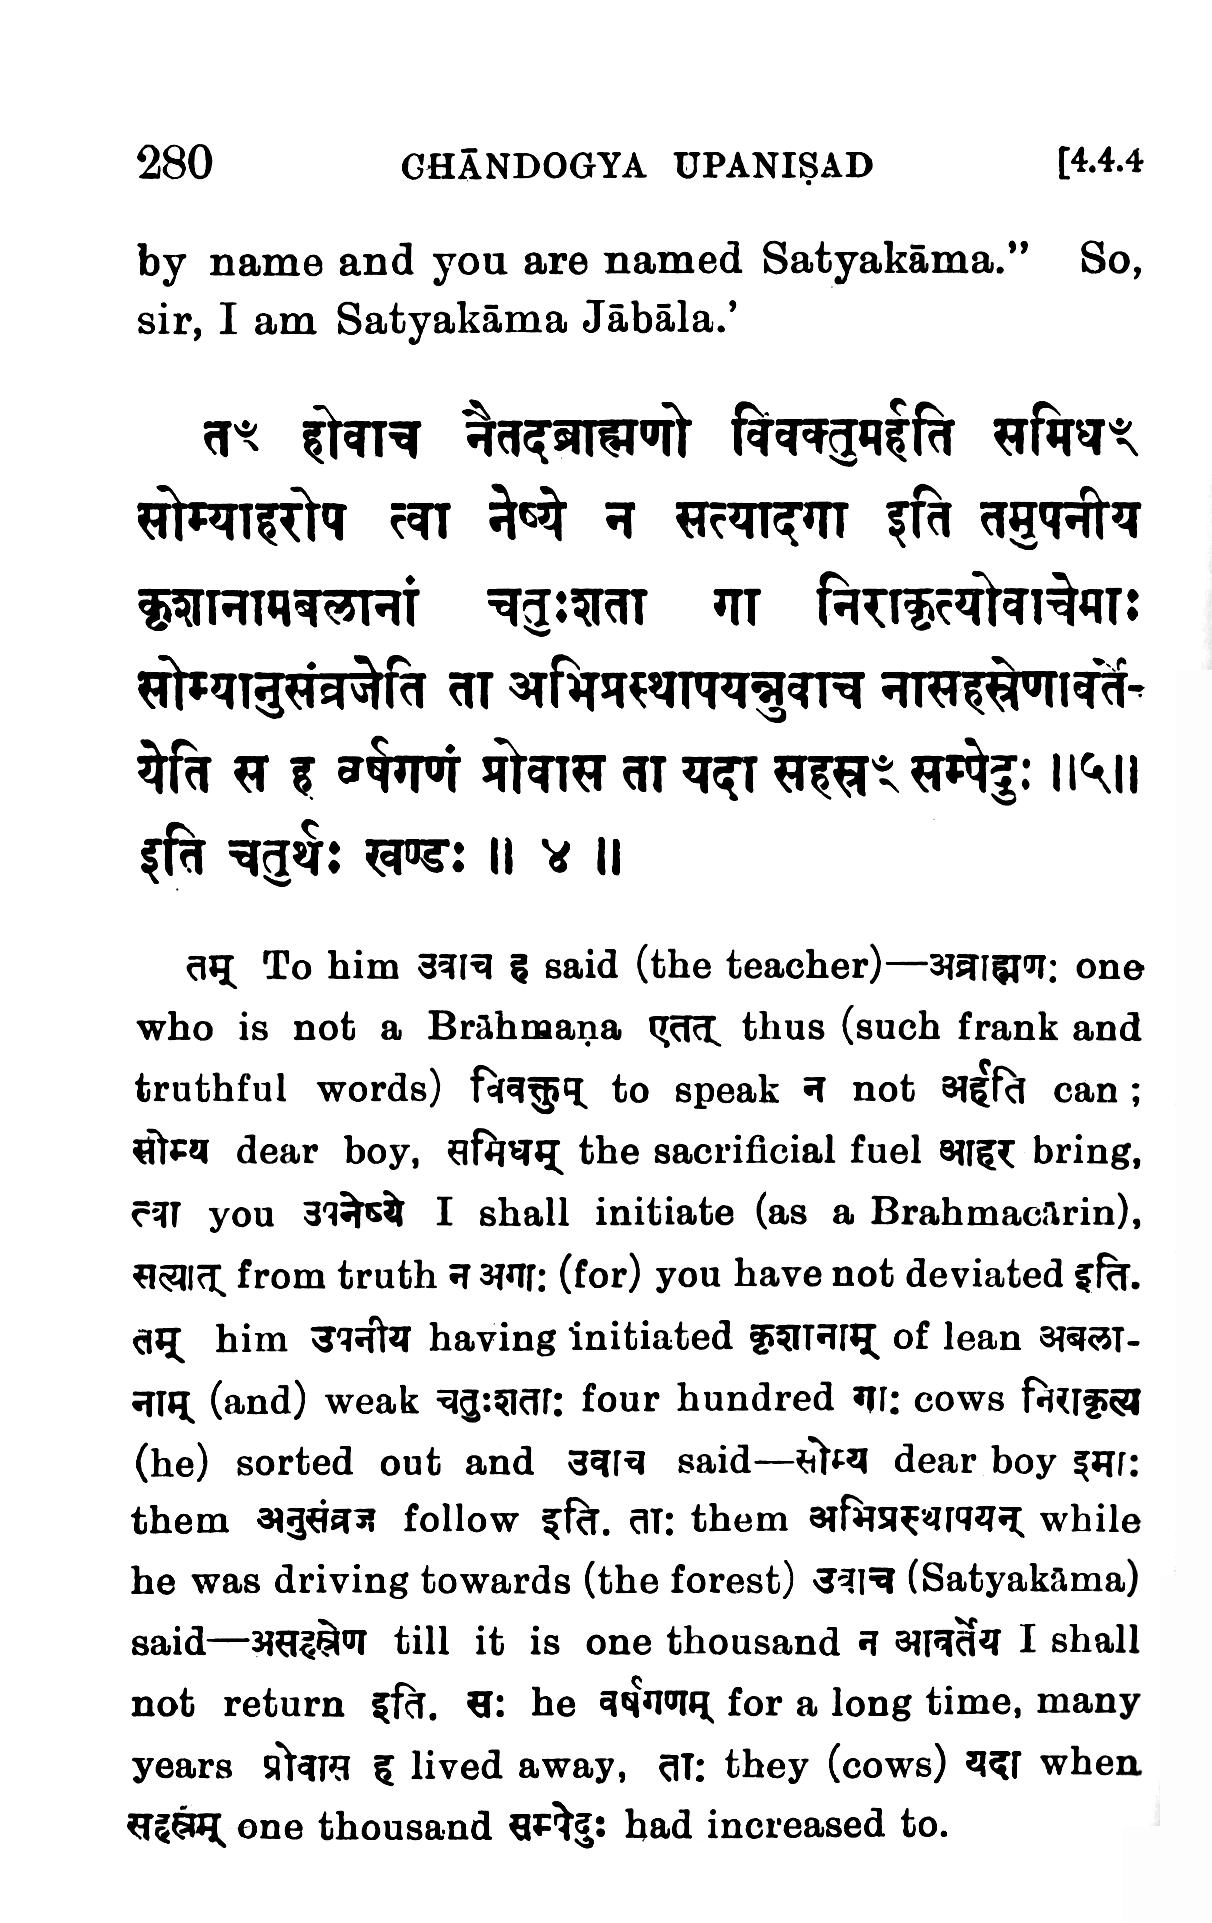 Chandogya Upanishad - Translated By Swami Gambhirananda